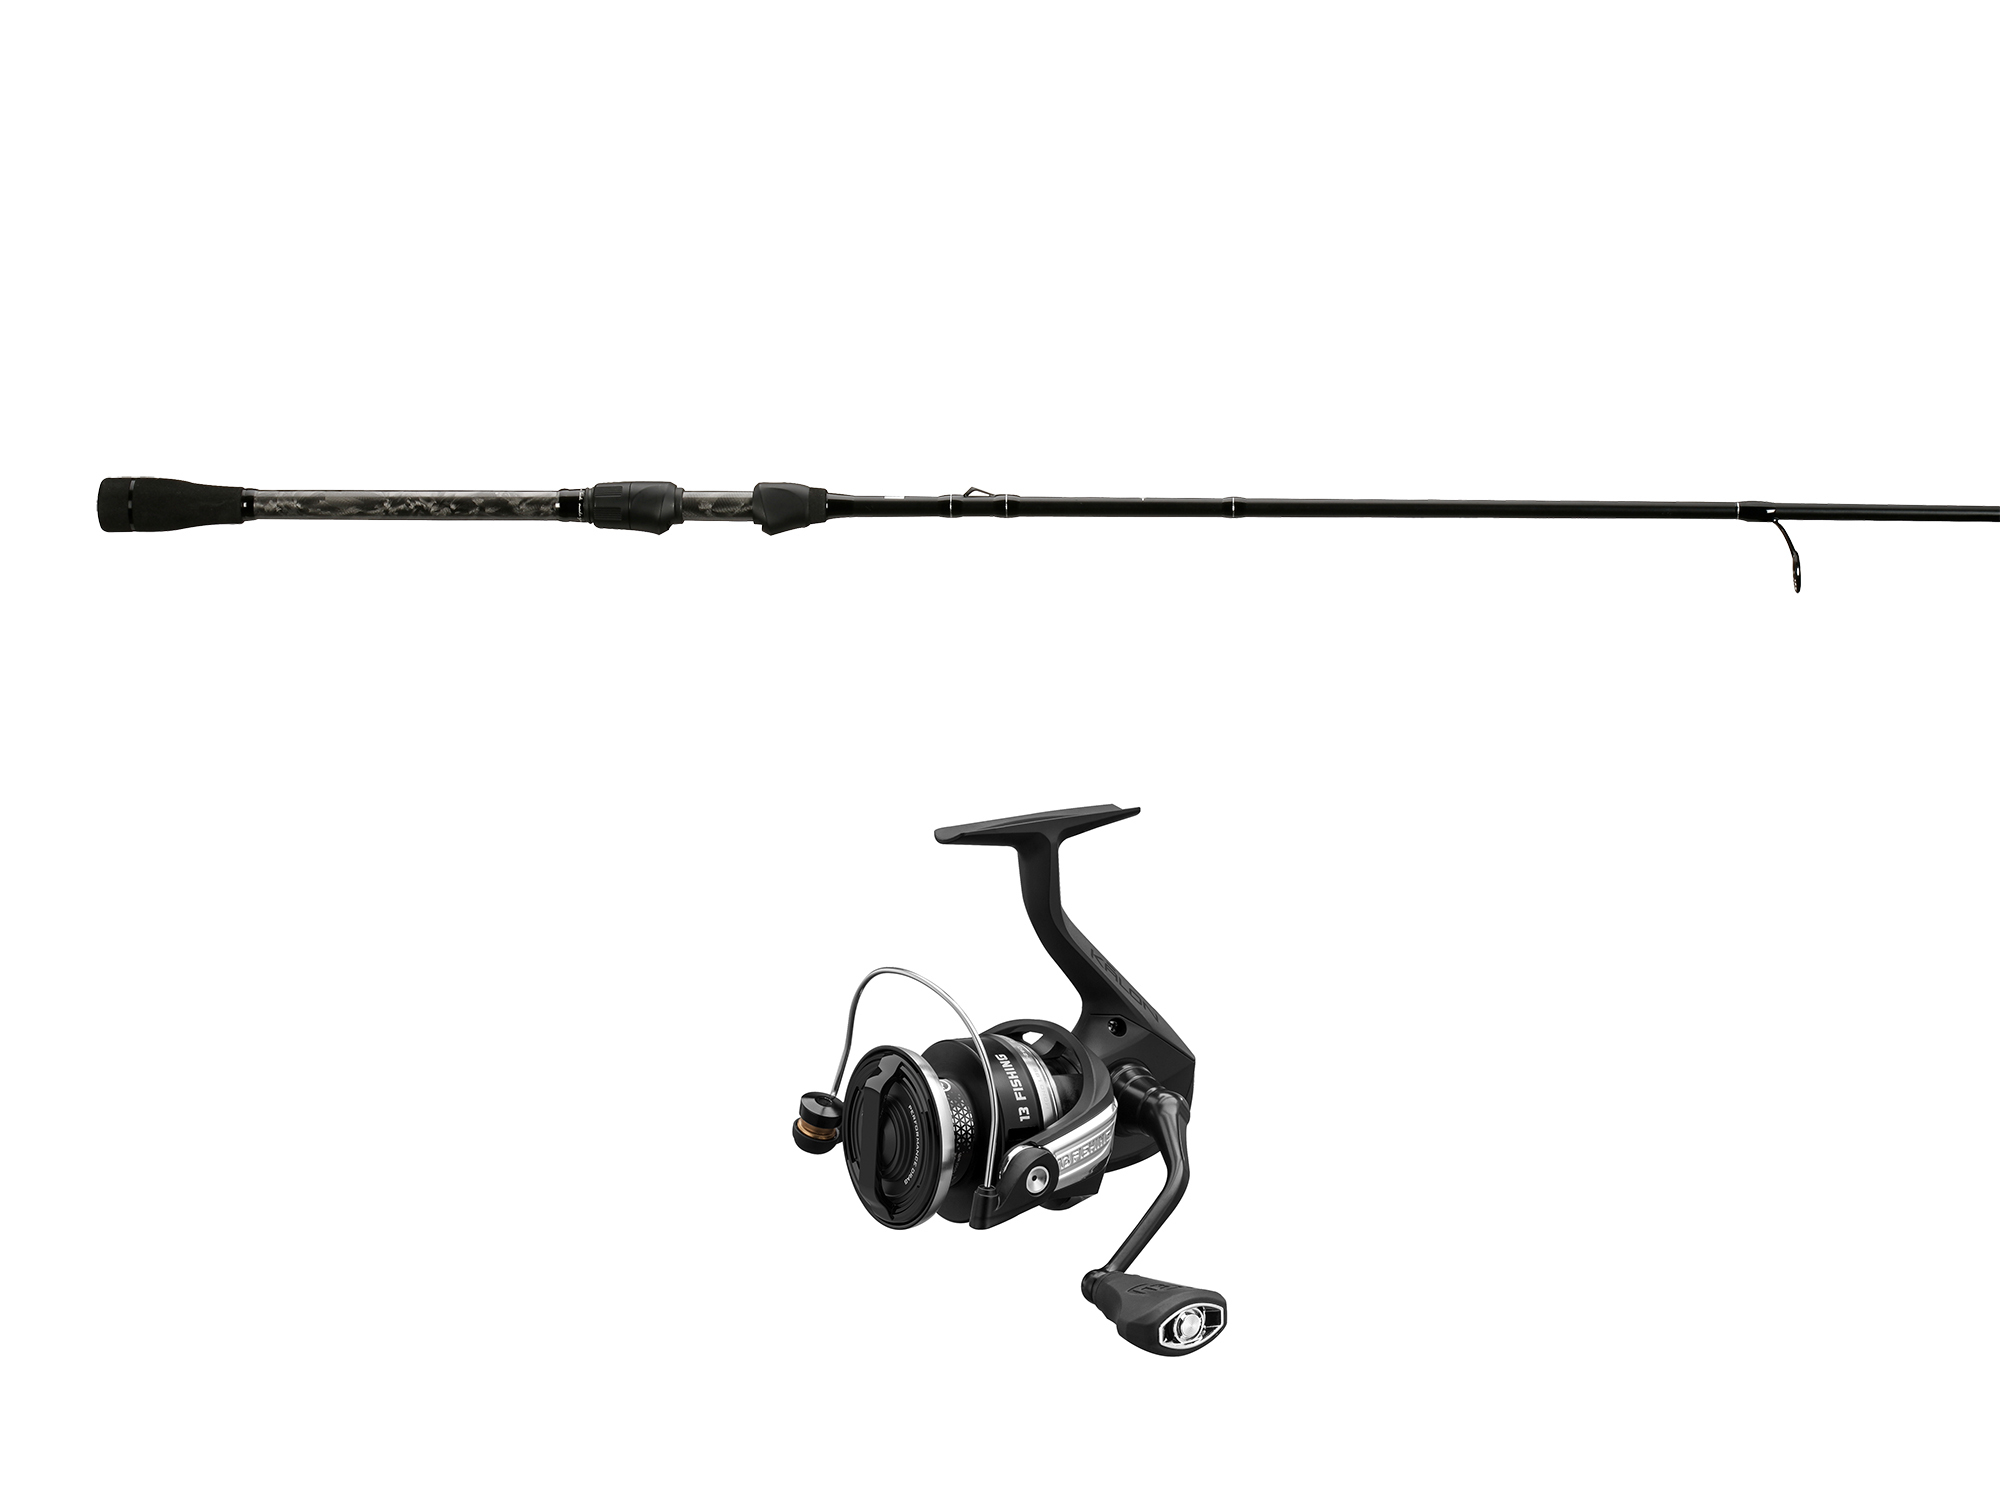 https://shopkarls.com/media/catalog/product/1/3/13-fishing-blackout-kalon-a-spinning-rod.jpg